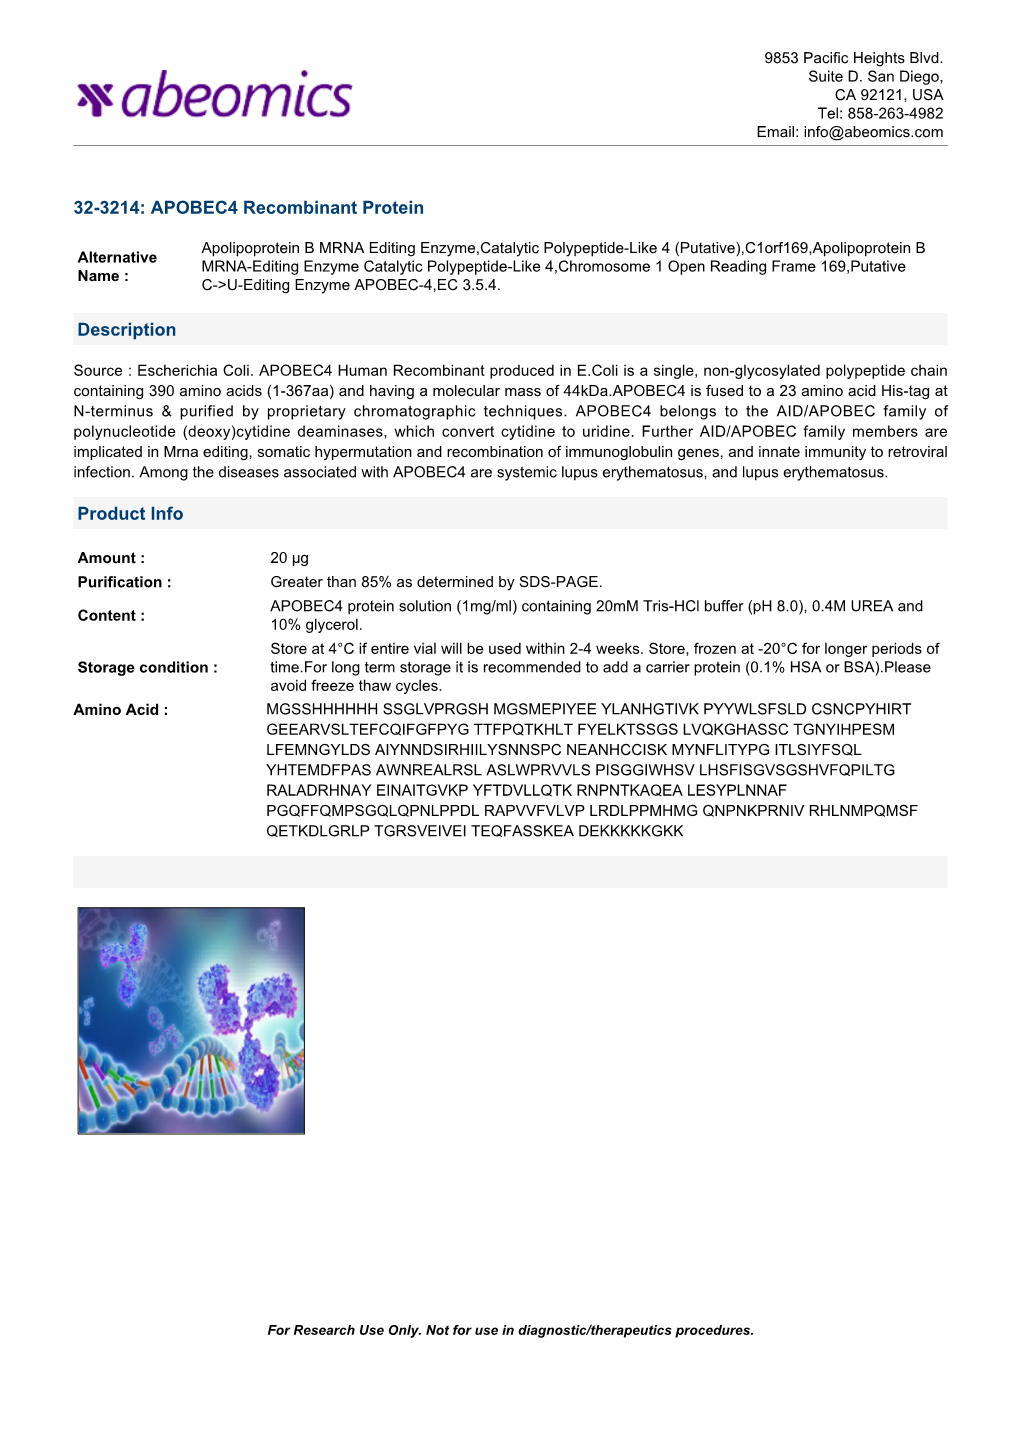 32-3214: APOBEC4 Recombinant Protein Description Product Info